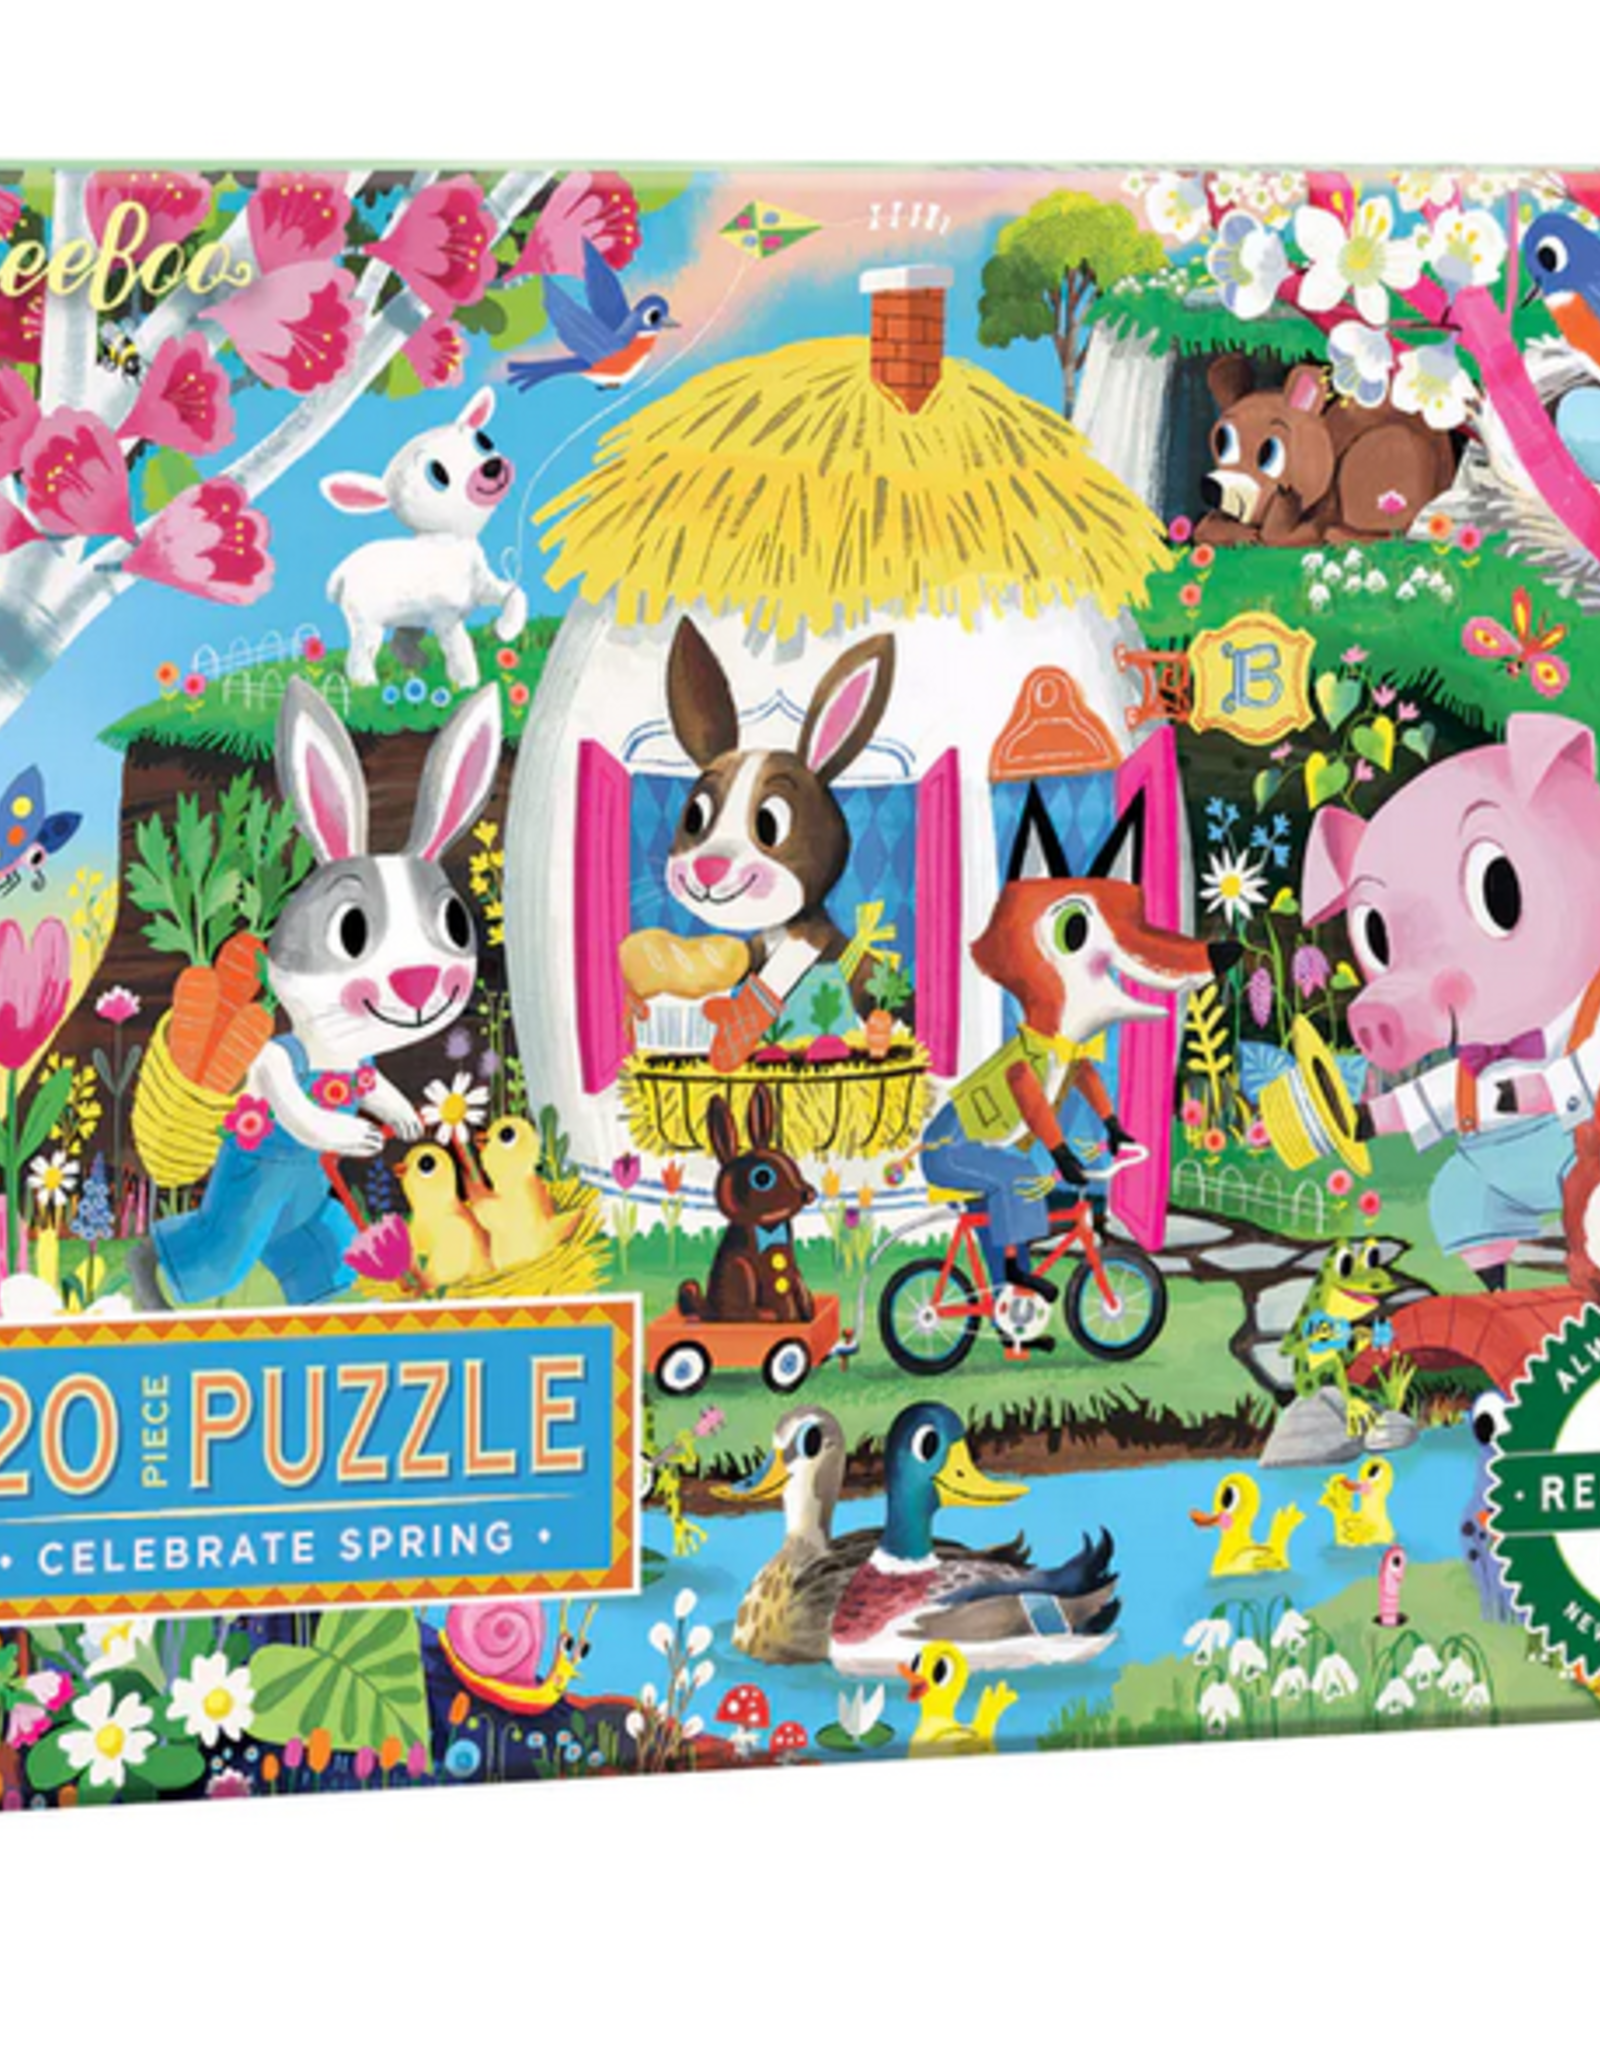 eeBoo 20pc Puzzle: Celebrate Spring